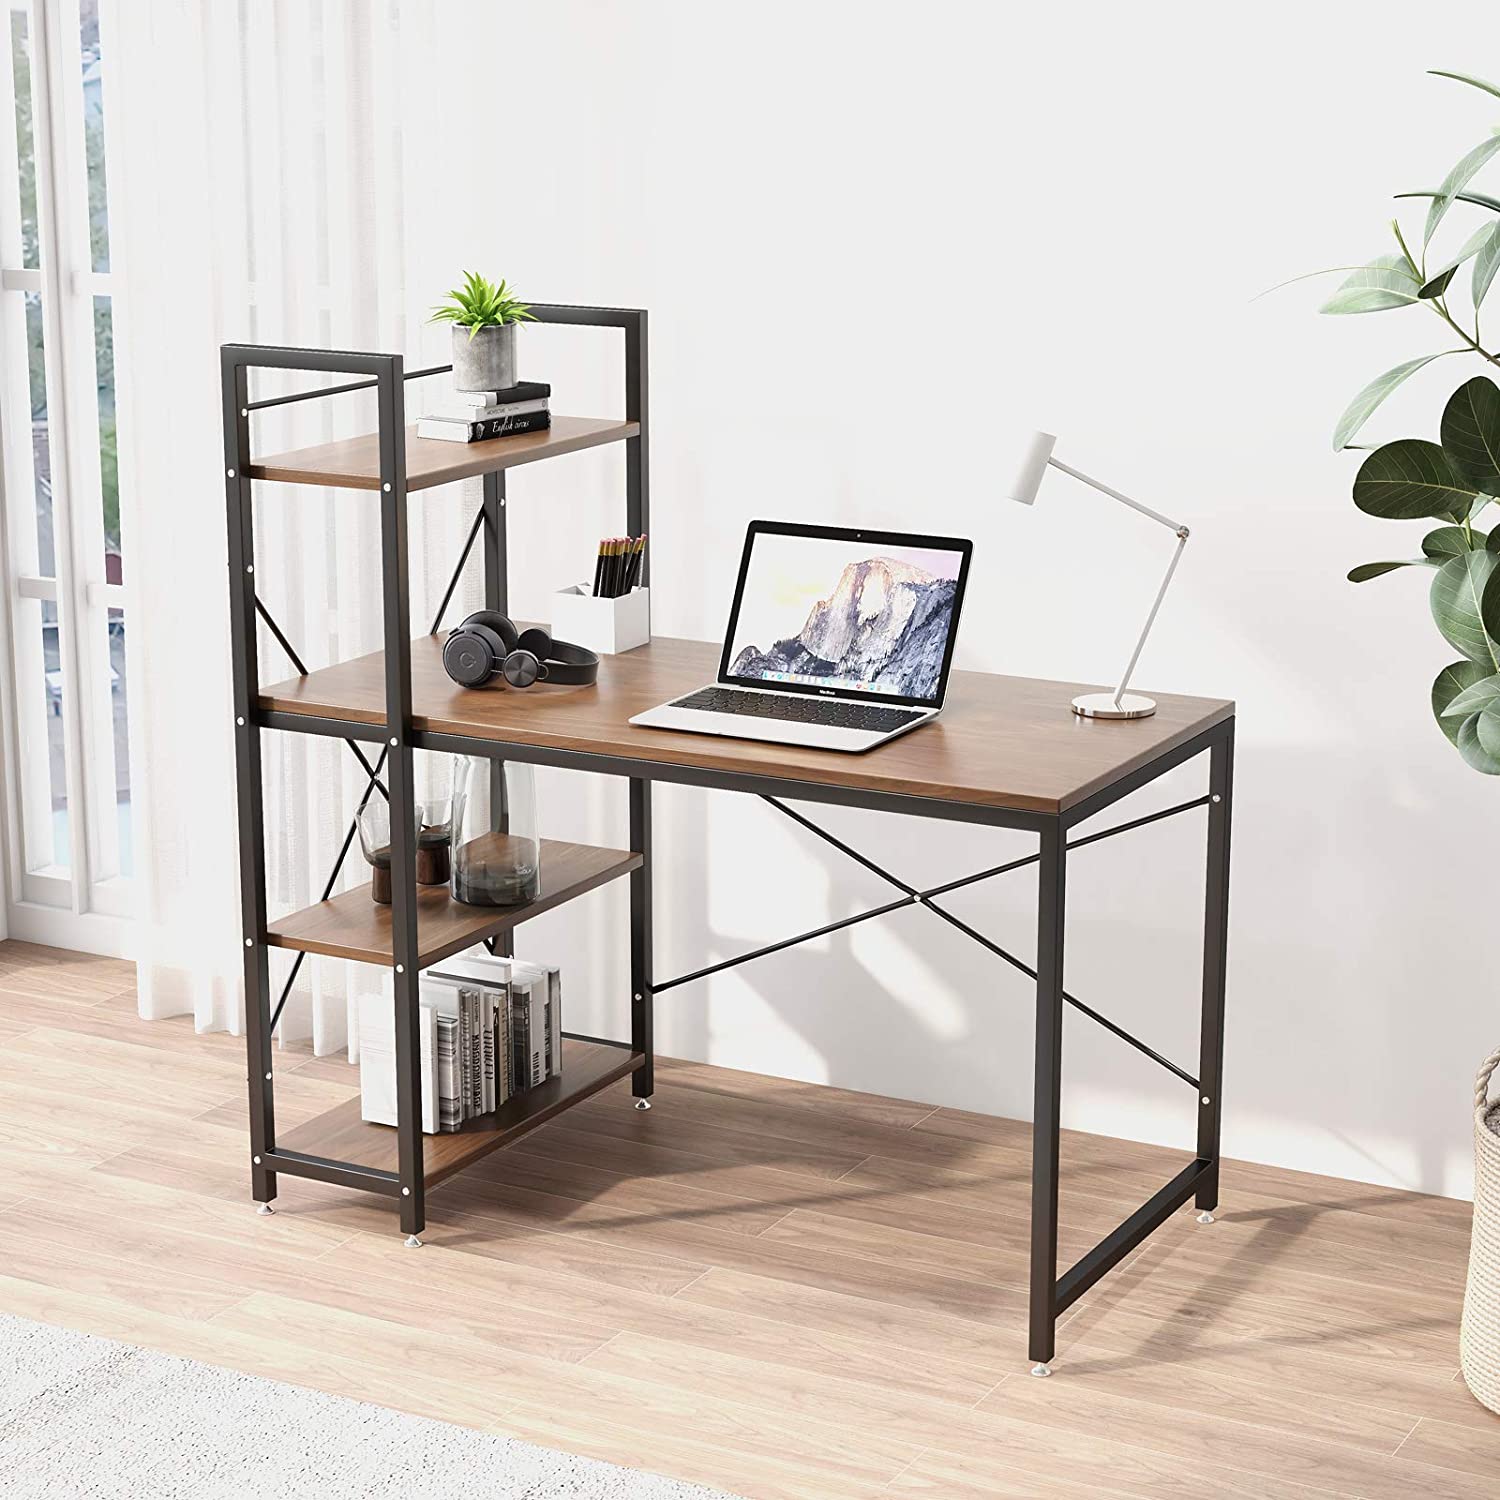 Narvik Walnut Finish Desk with Shelves